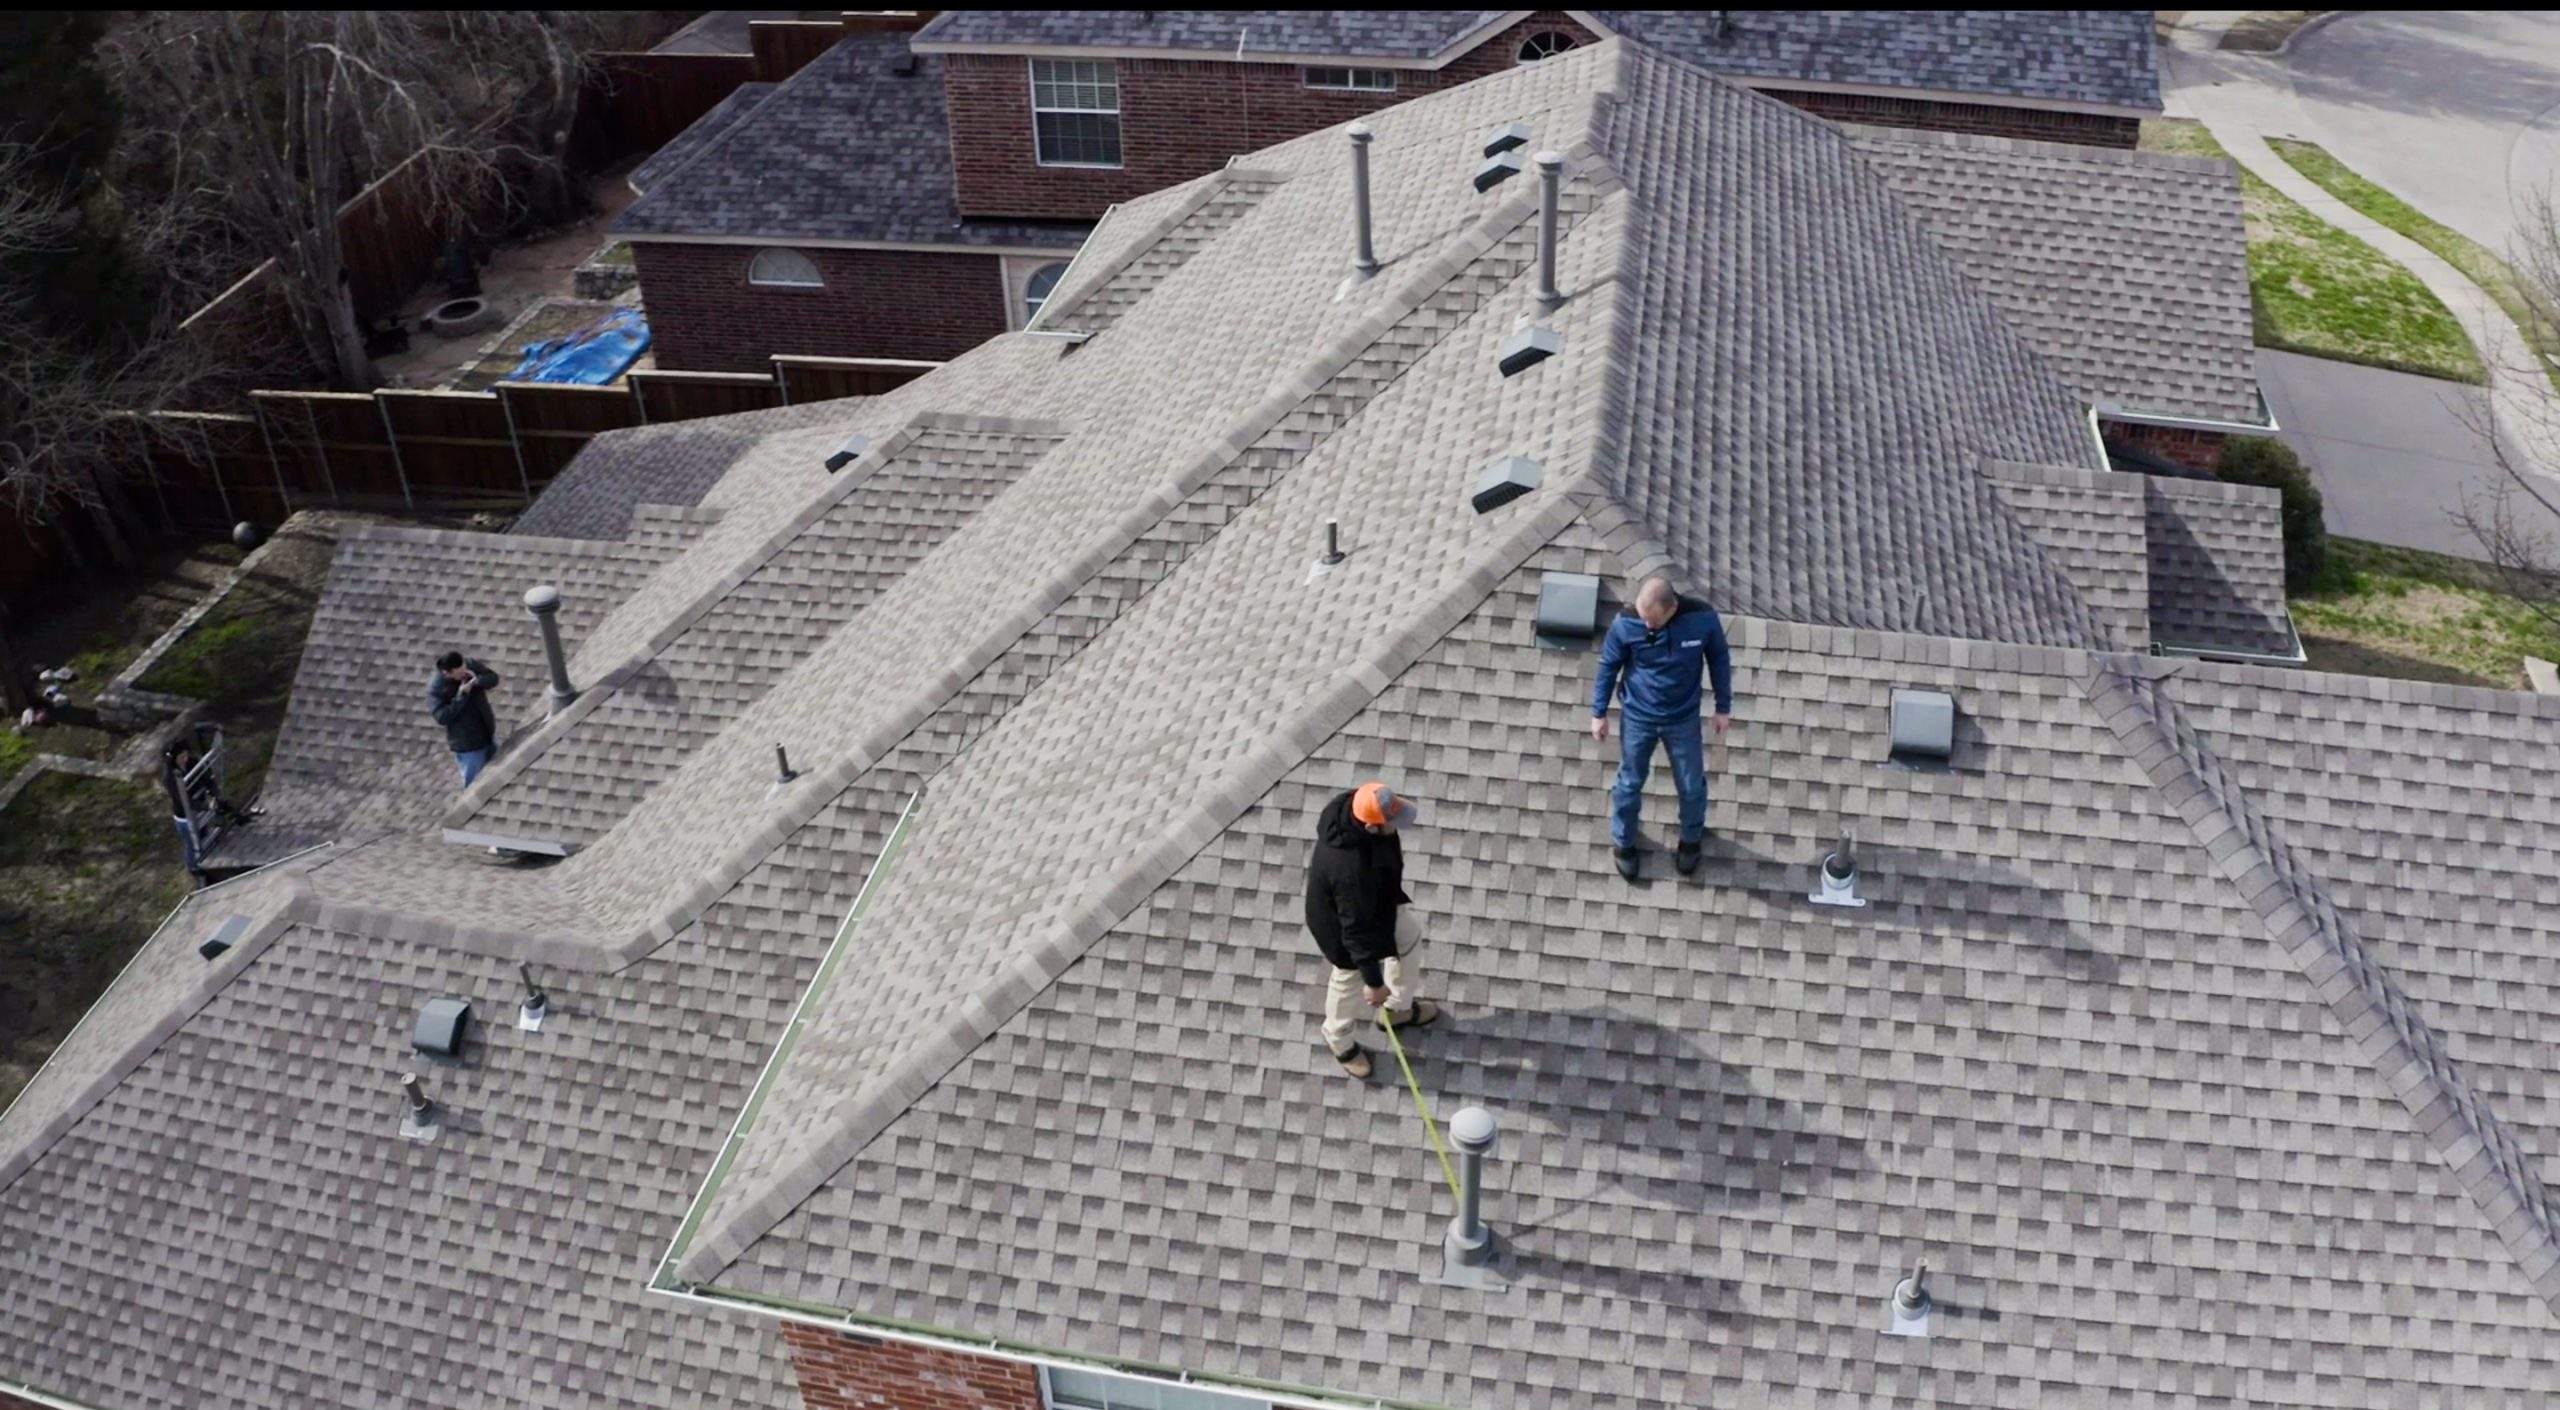 Ремонт и цялостно изграждане на нови покриви в Търговище. |Търговище|Ремонт на покриви